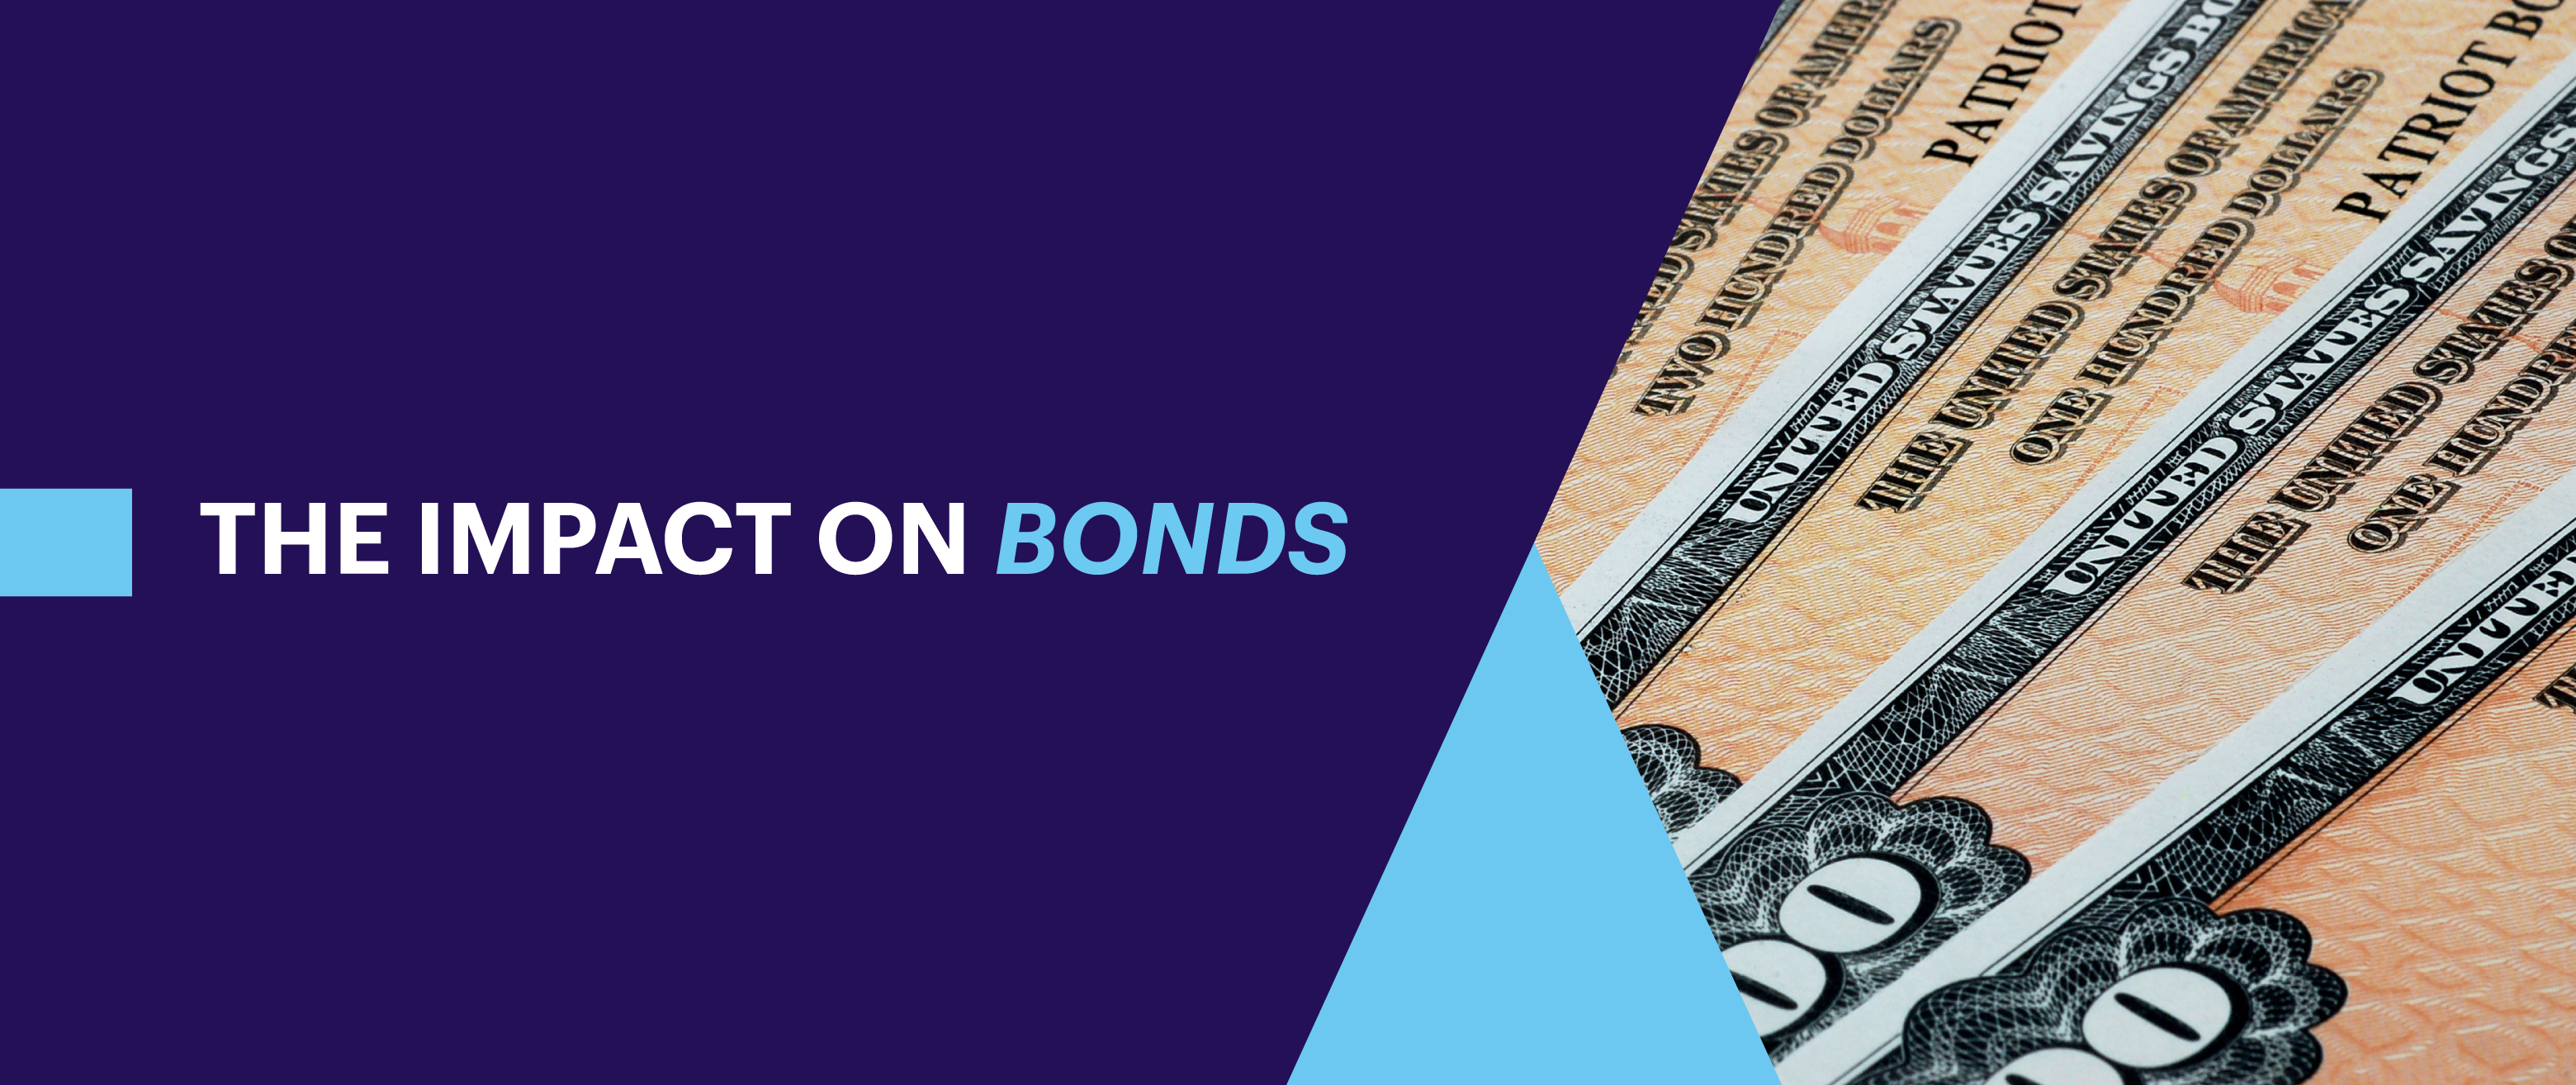 The impact on bonds